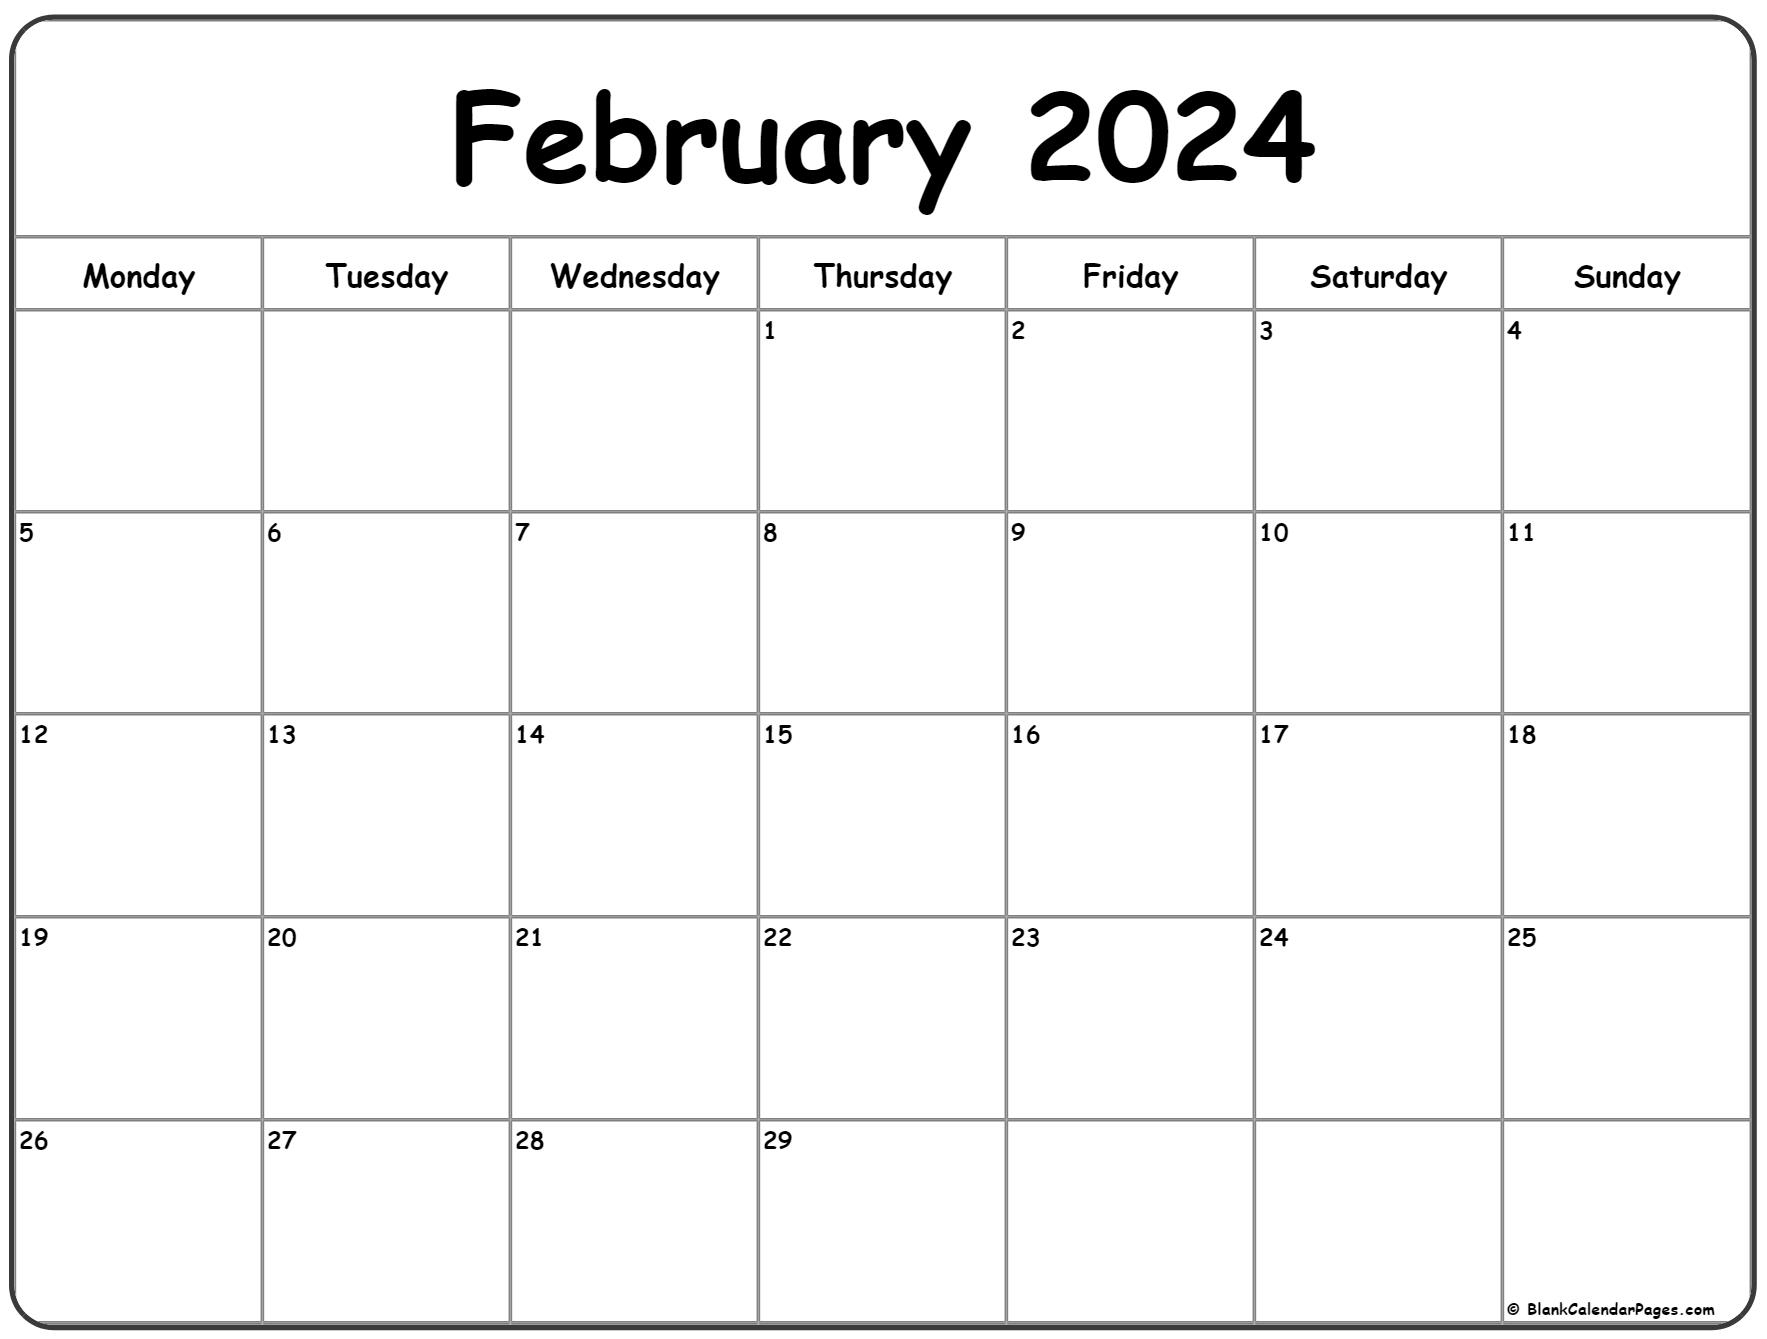 February 2024 Monday Calendar | Monday To Sunday for February 2024 Calendar Blank Printable